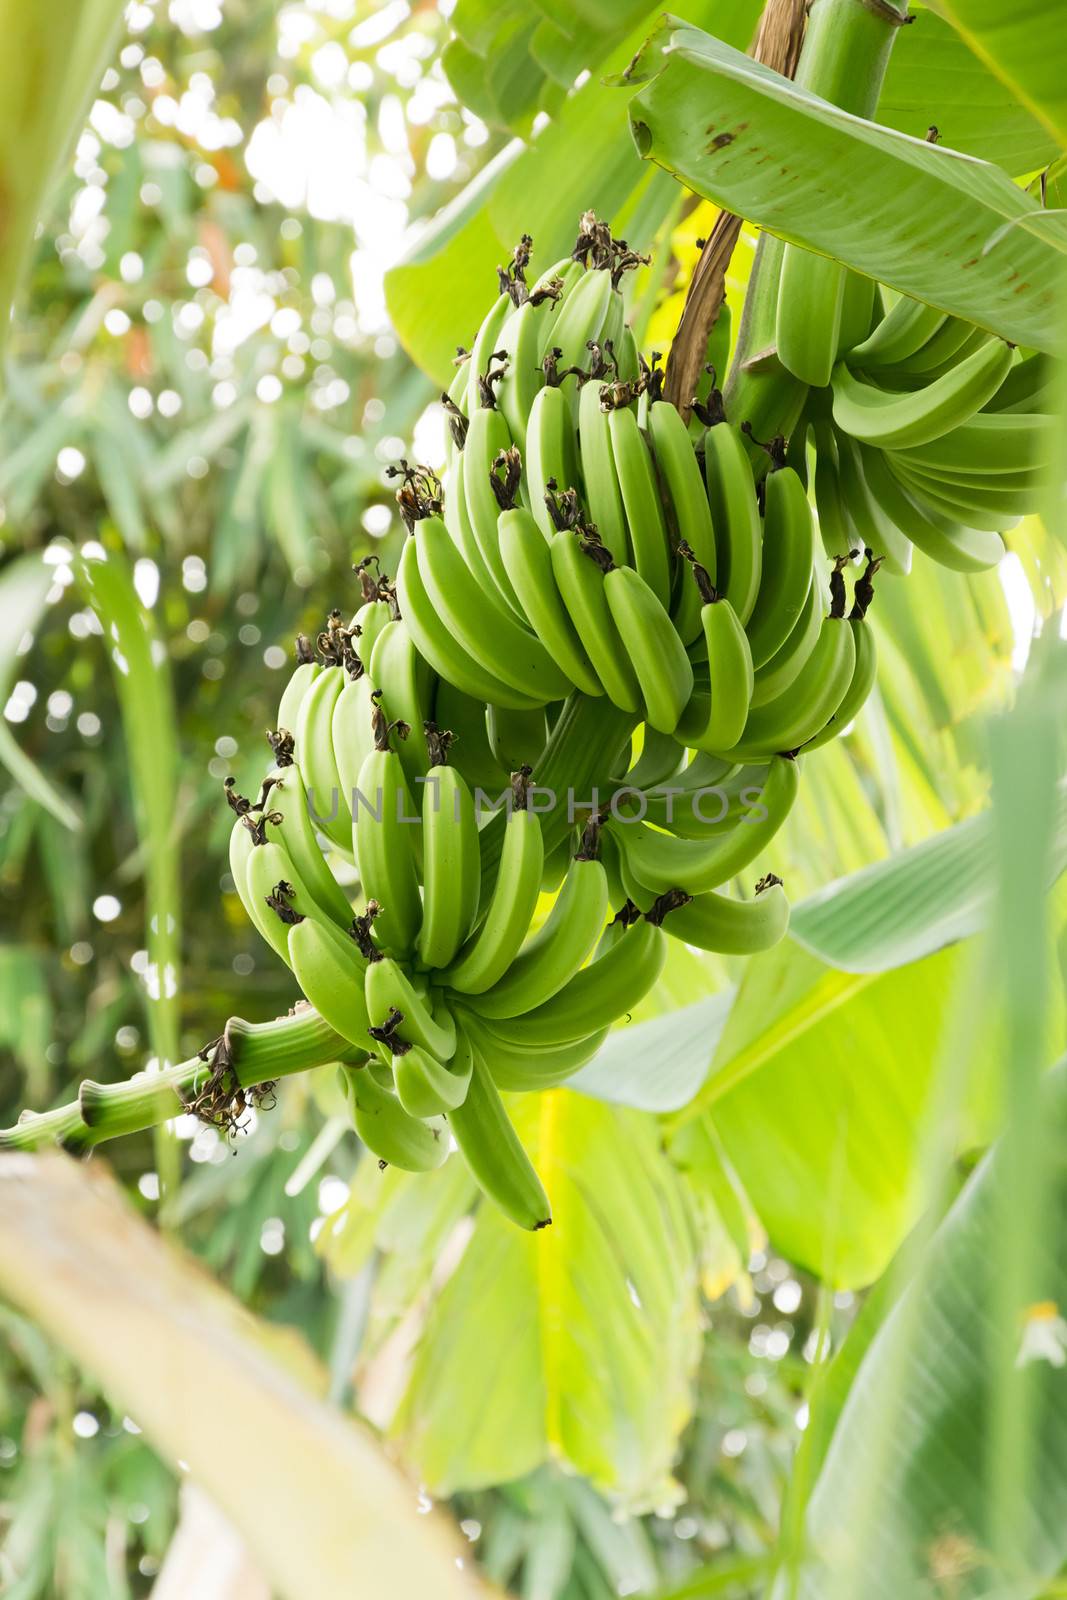 Bunch of ripening bananas by elwynn